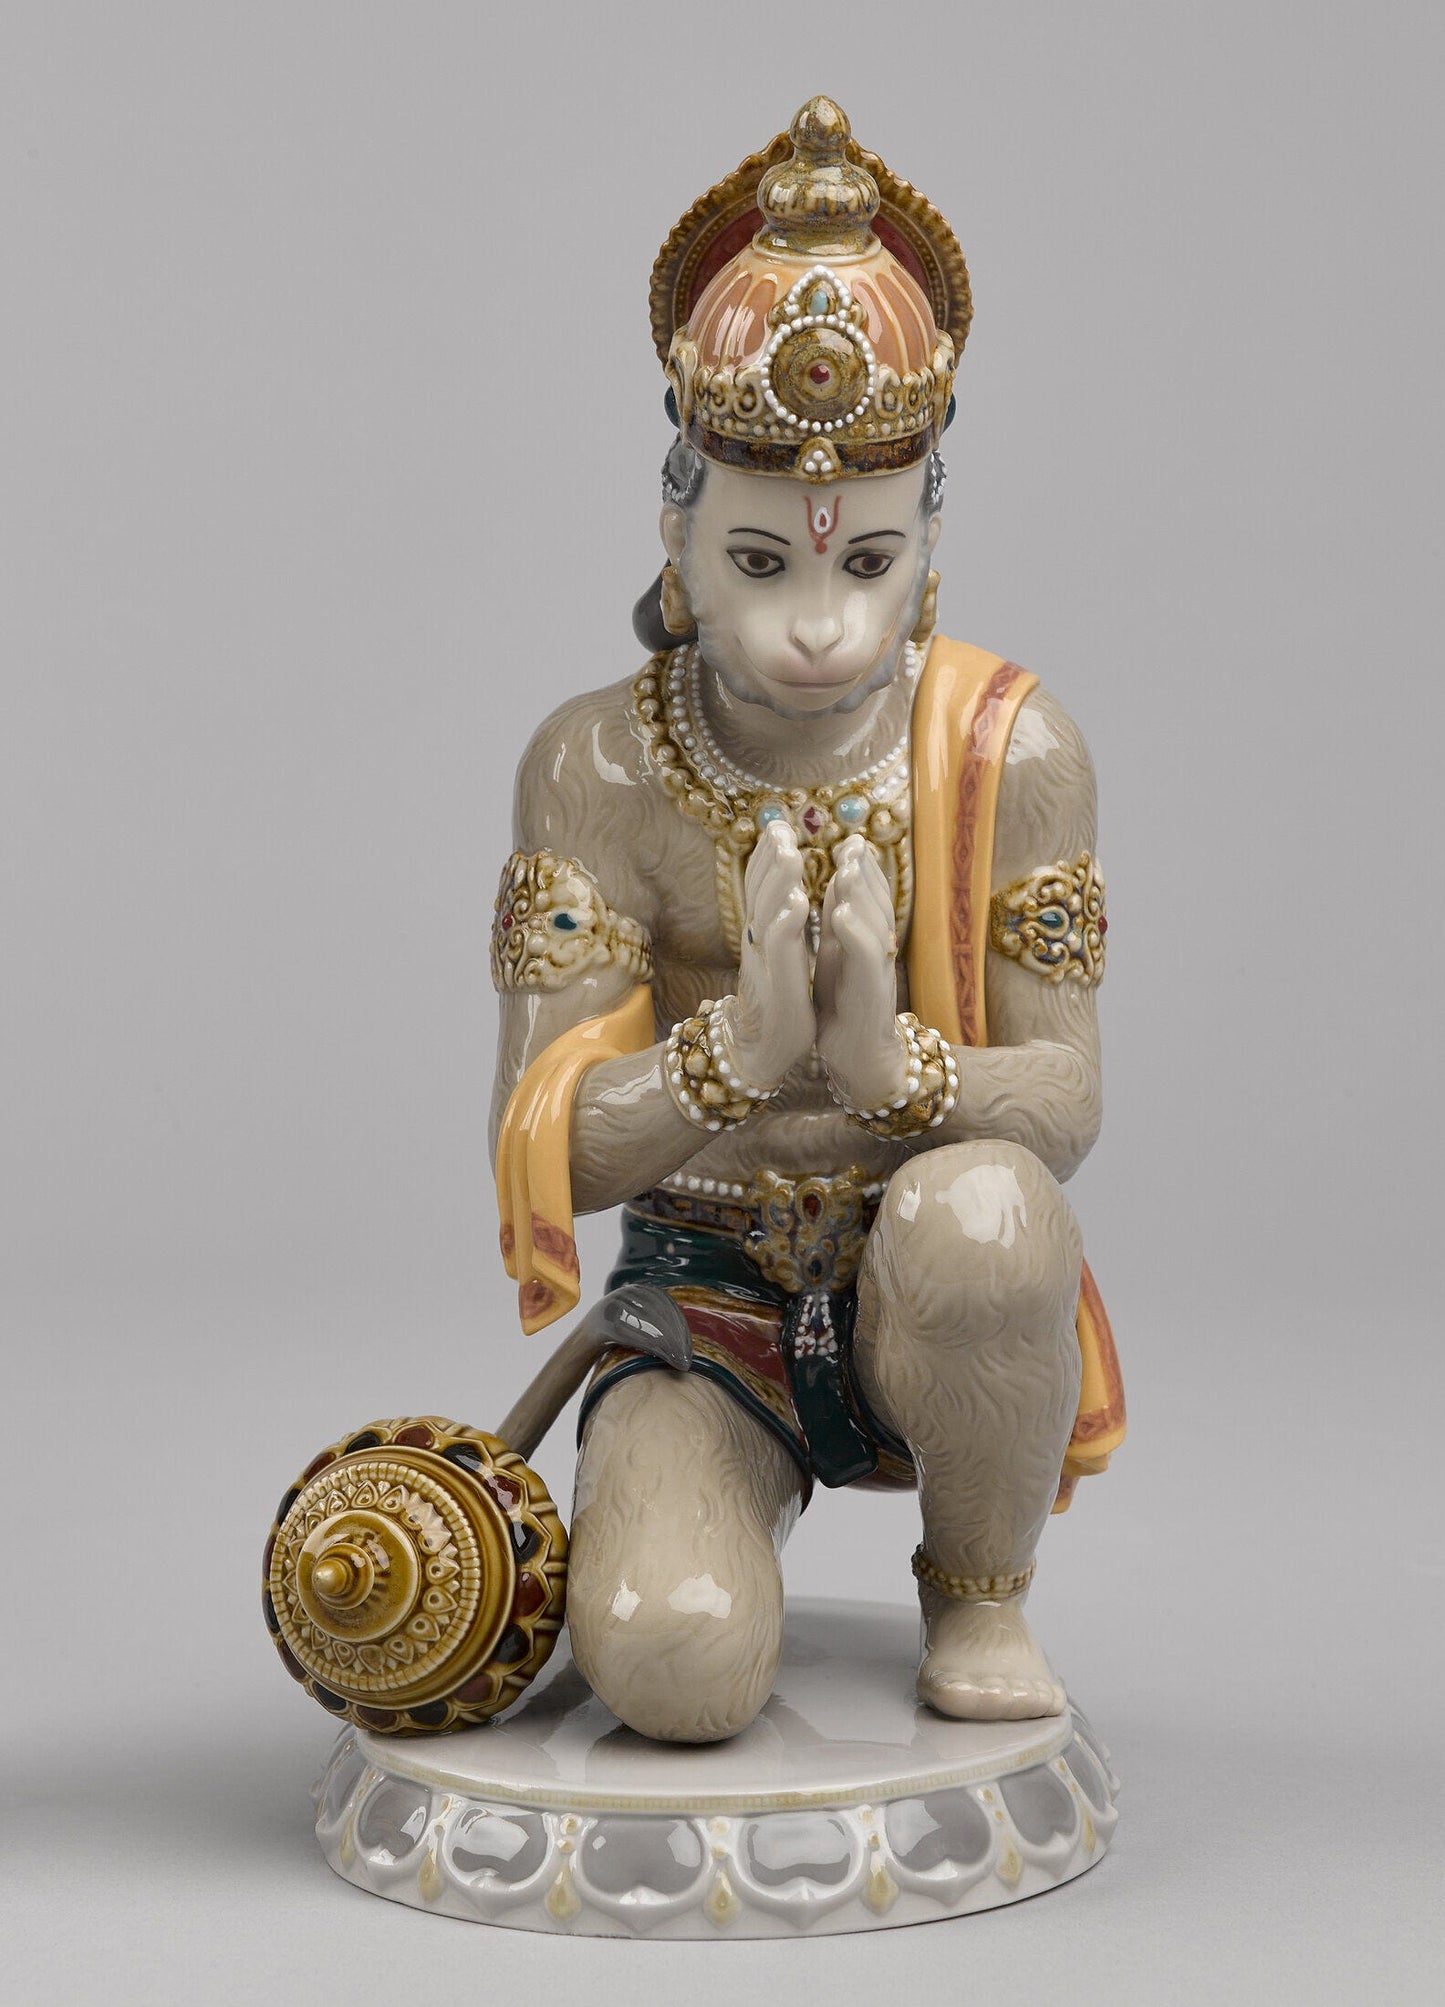 Lakshman and Hanuman Sculpture Limited Edition